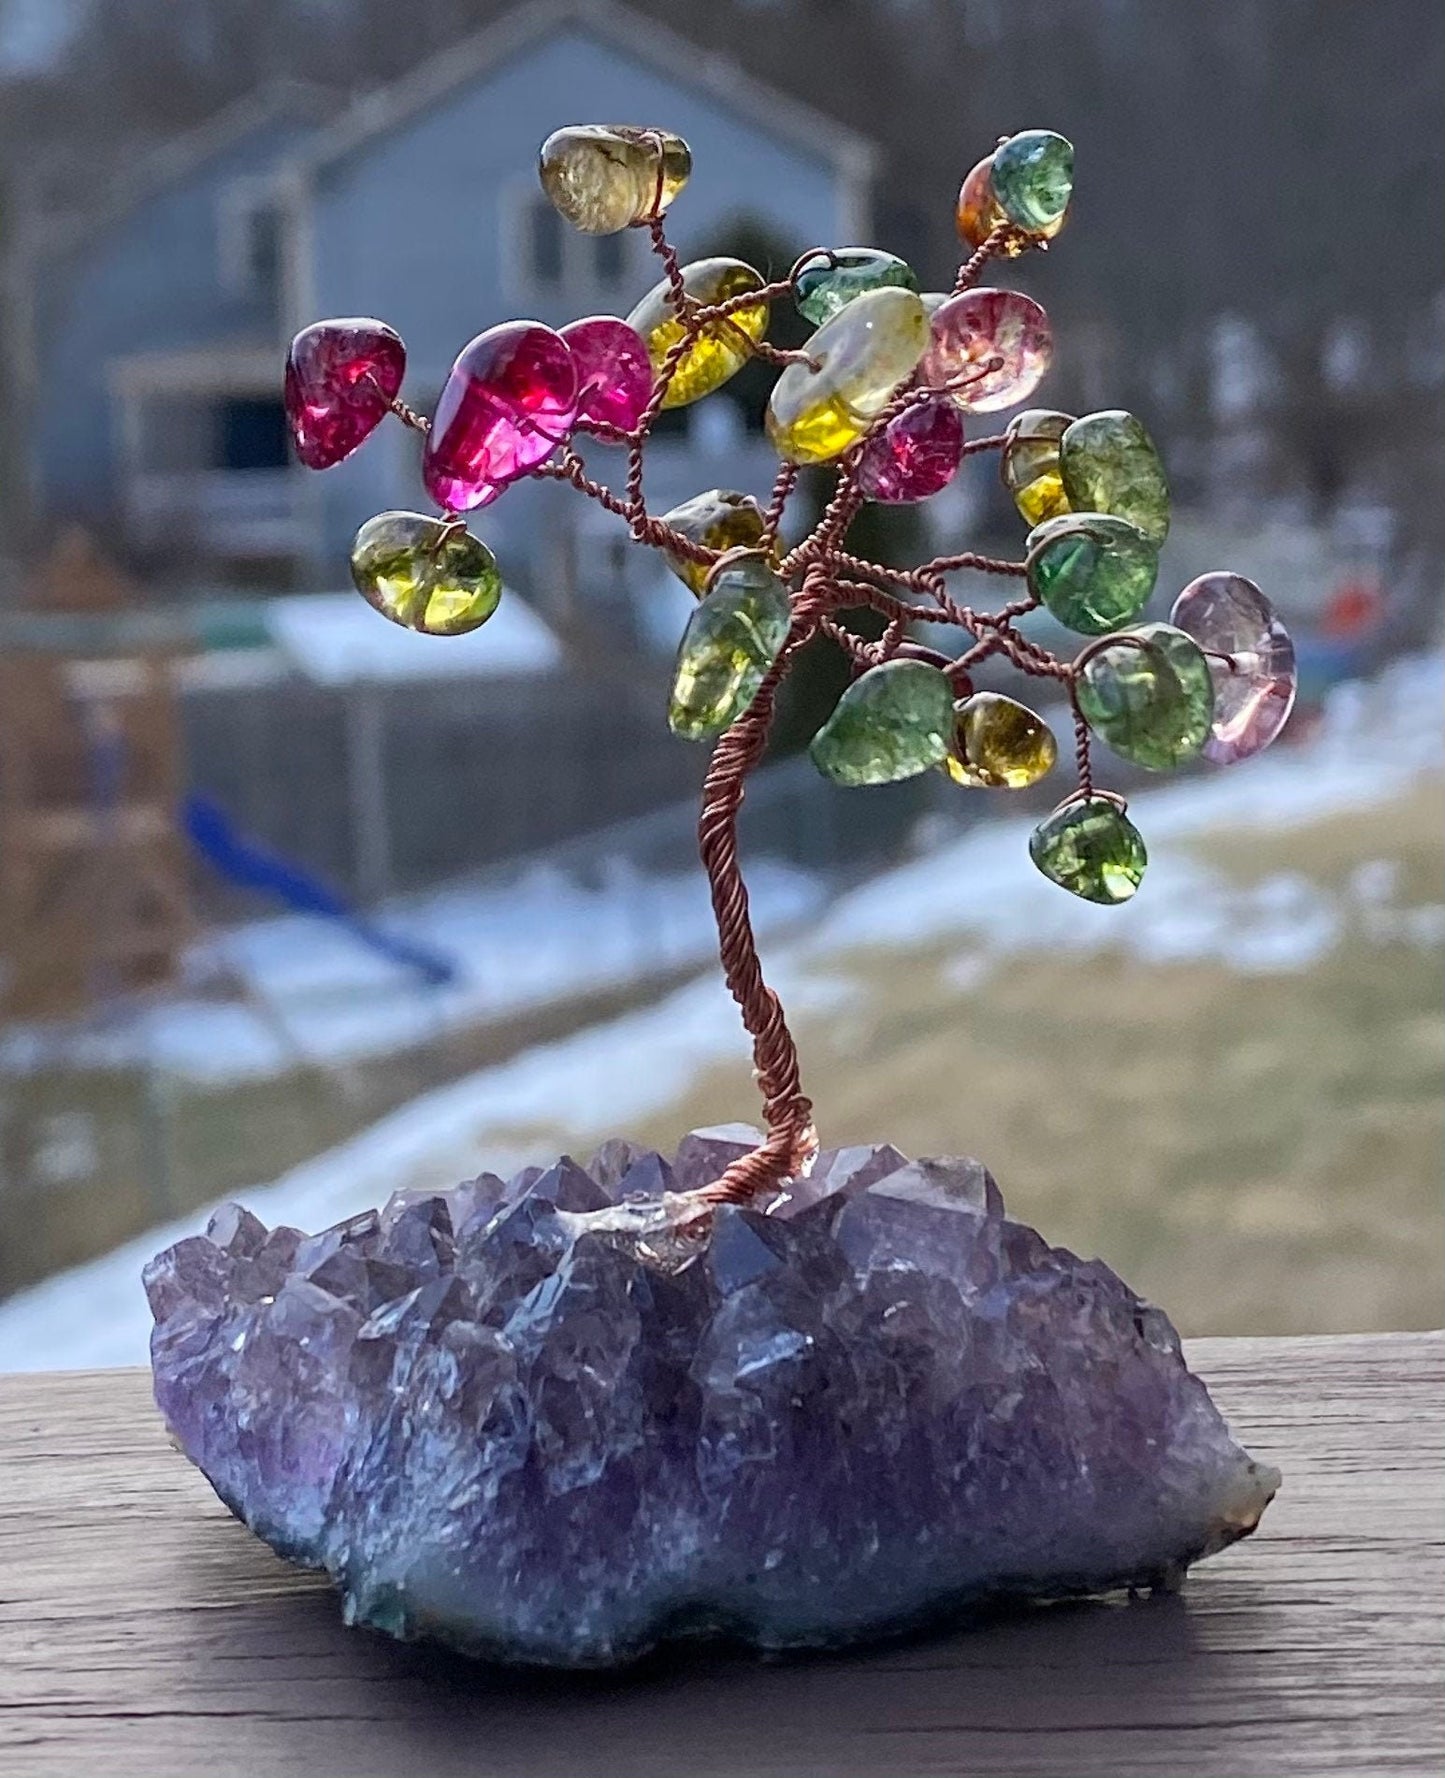 Mini colorful bonsai